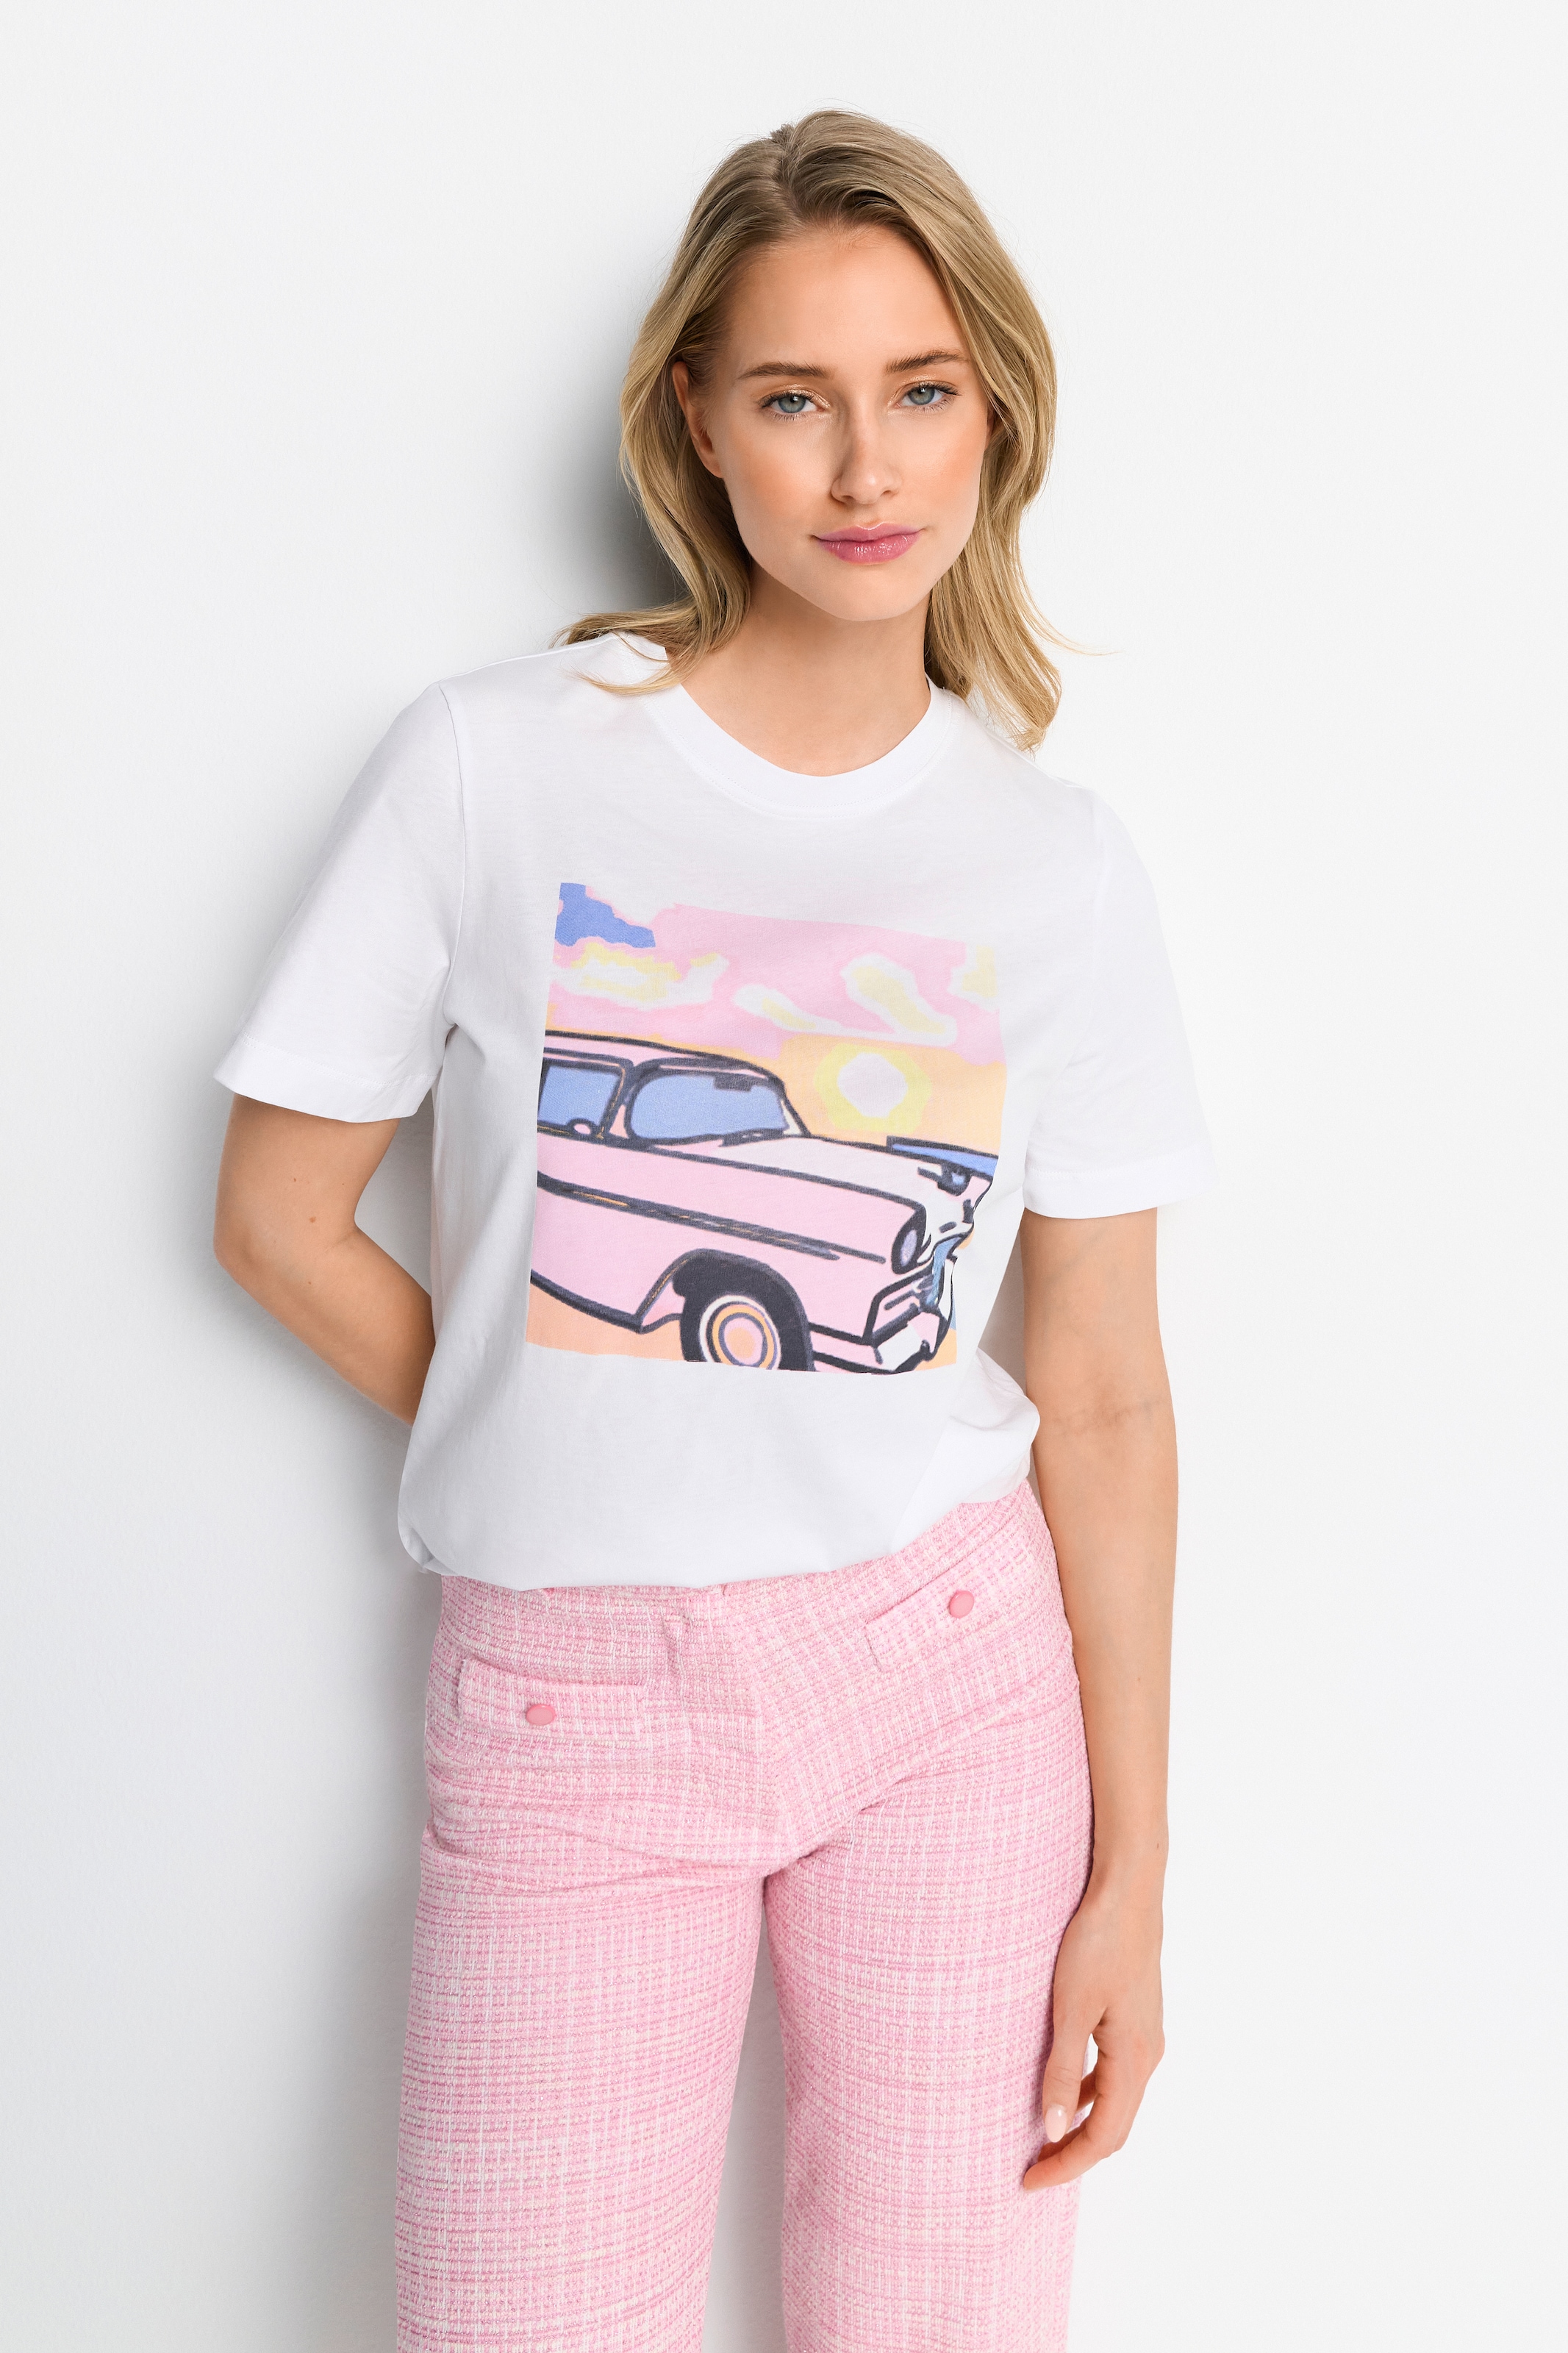 Print-Shirt, barbie car print